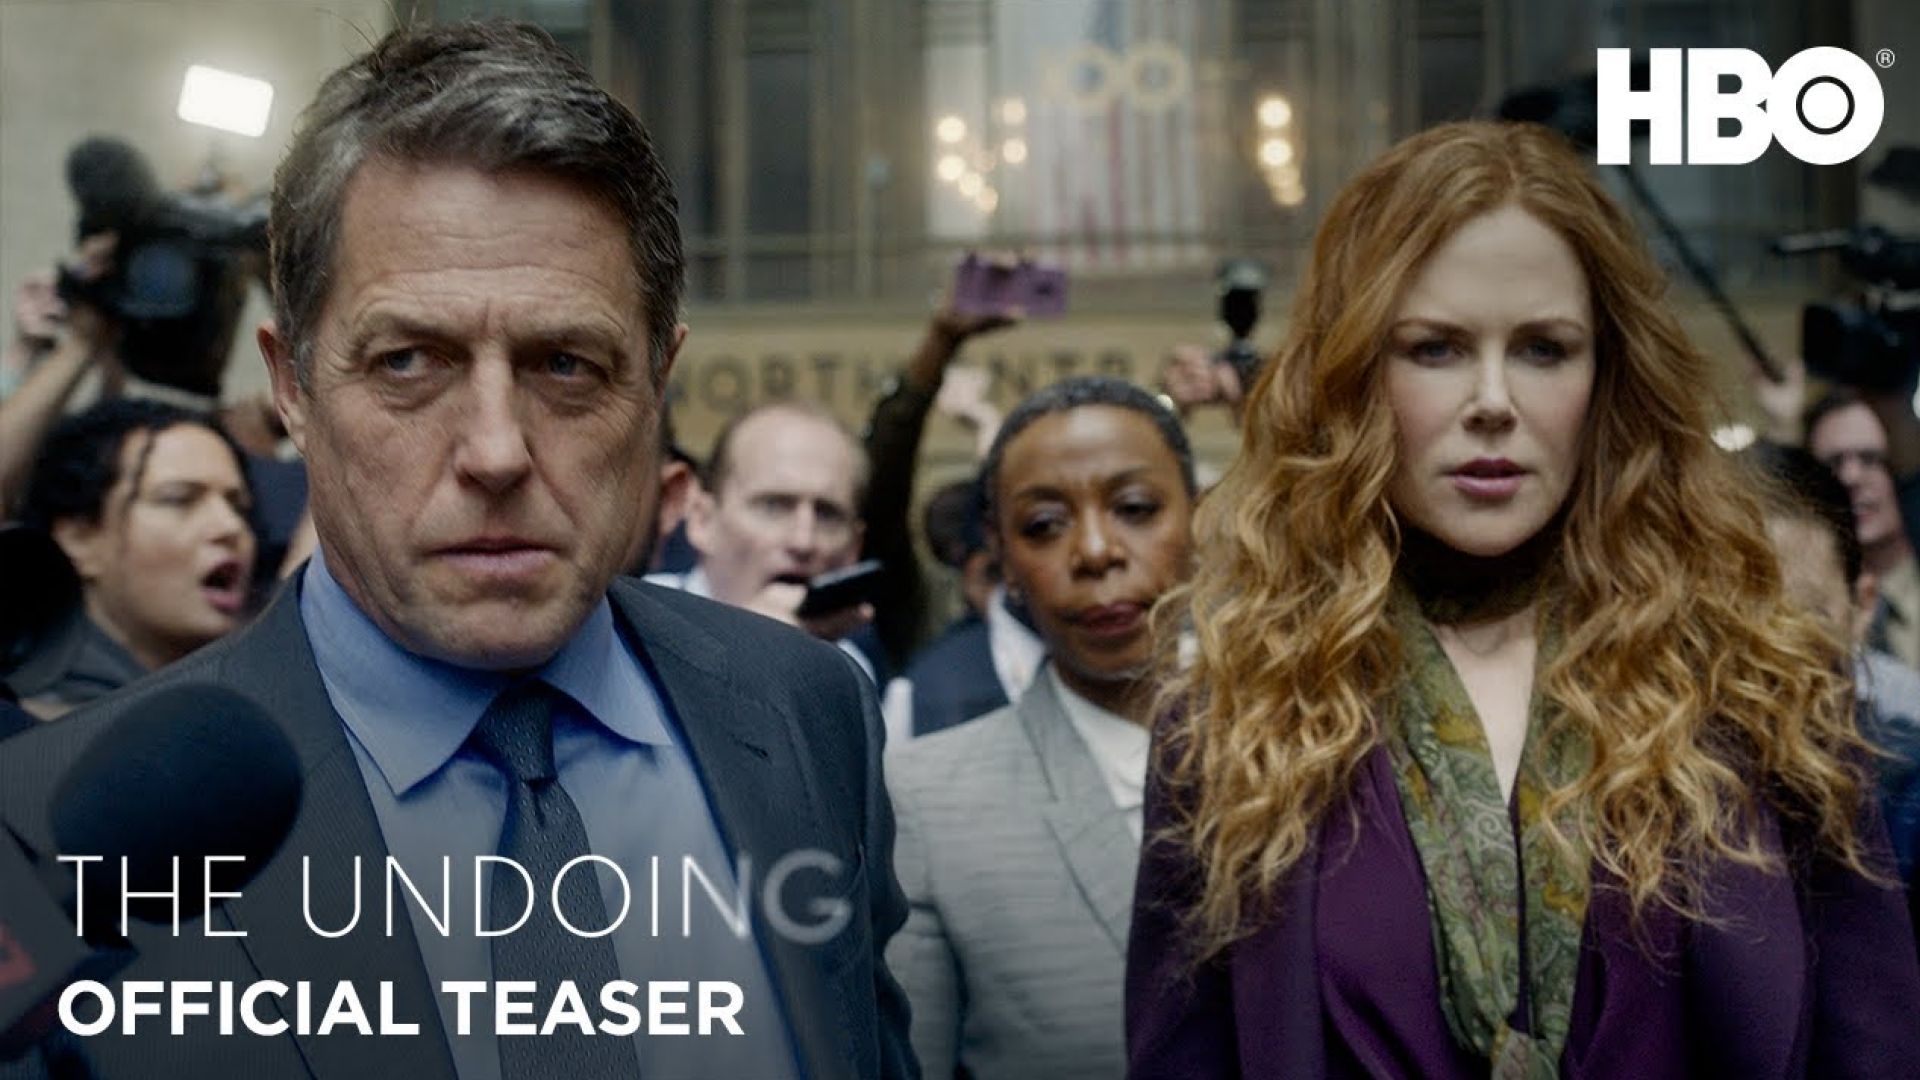 The Undoing Teaser with Hugh Grant and Nicole Kidman (HBO)